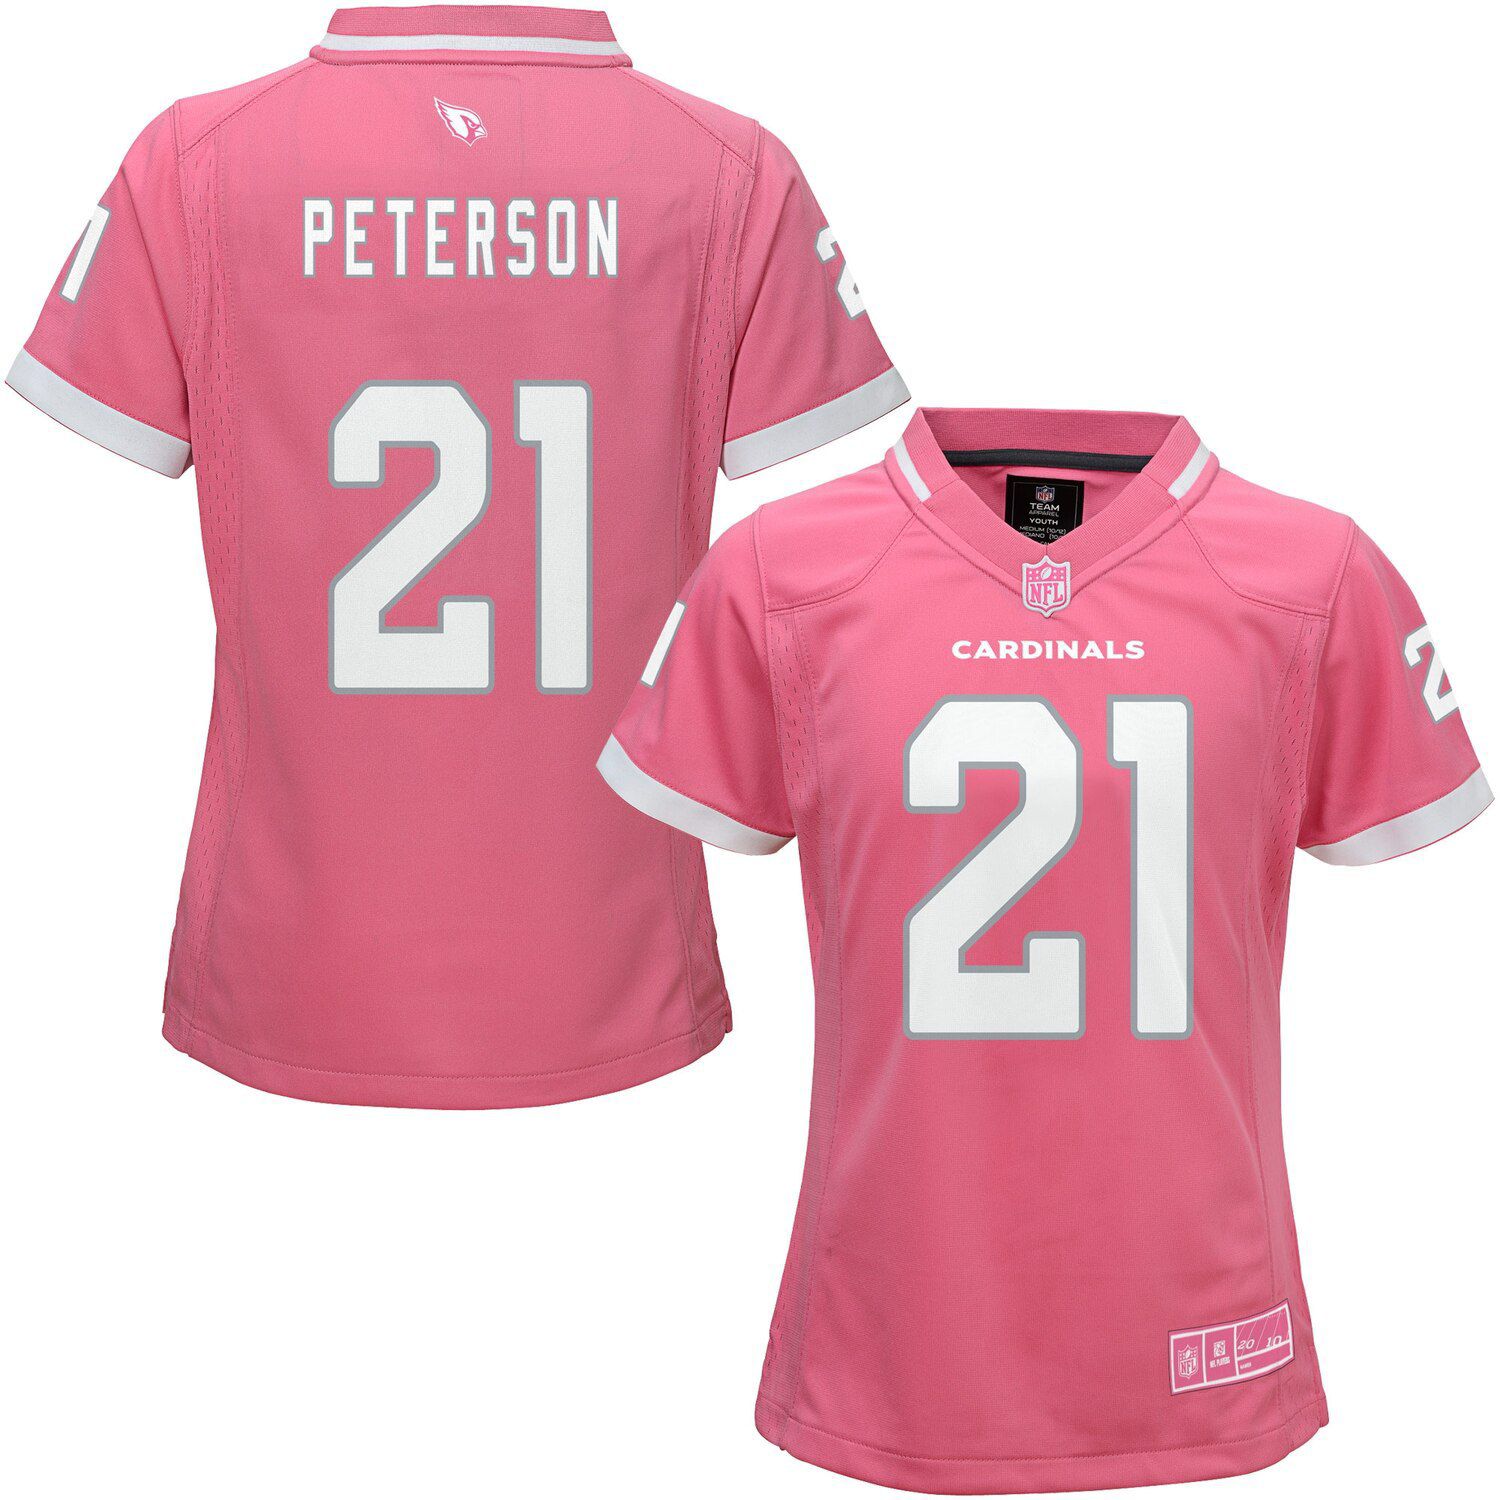 Peterson Patrick jersey